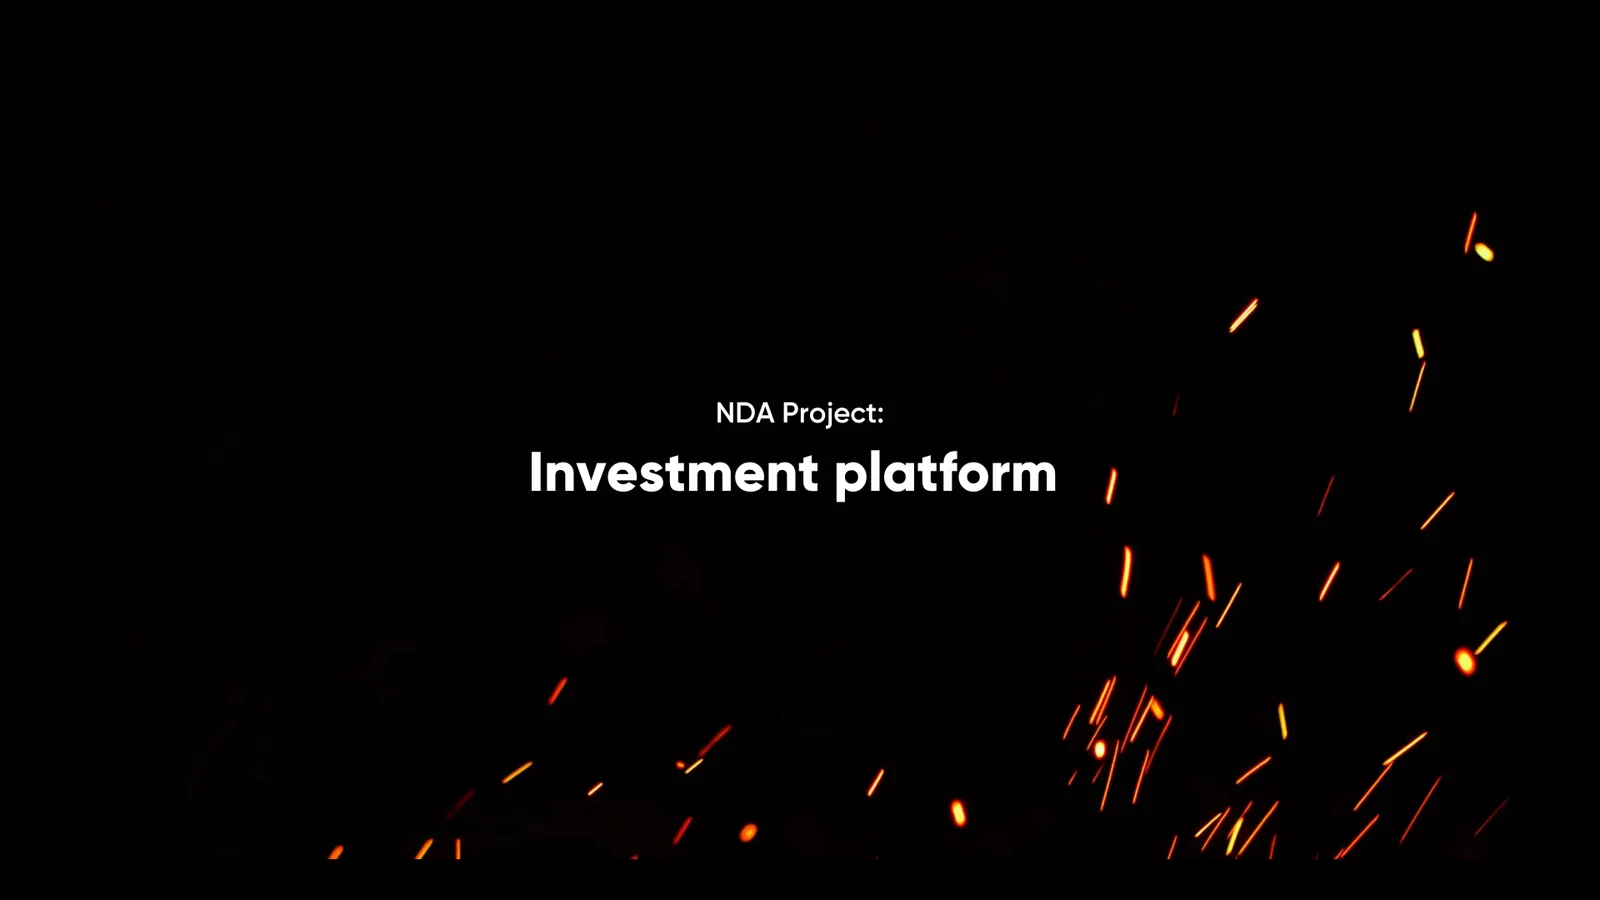 Investment platform project